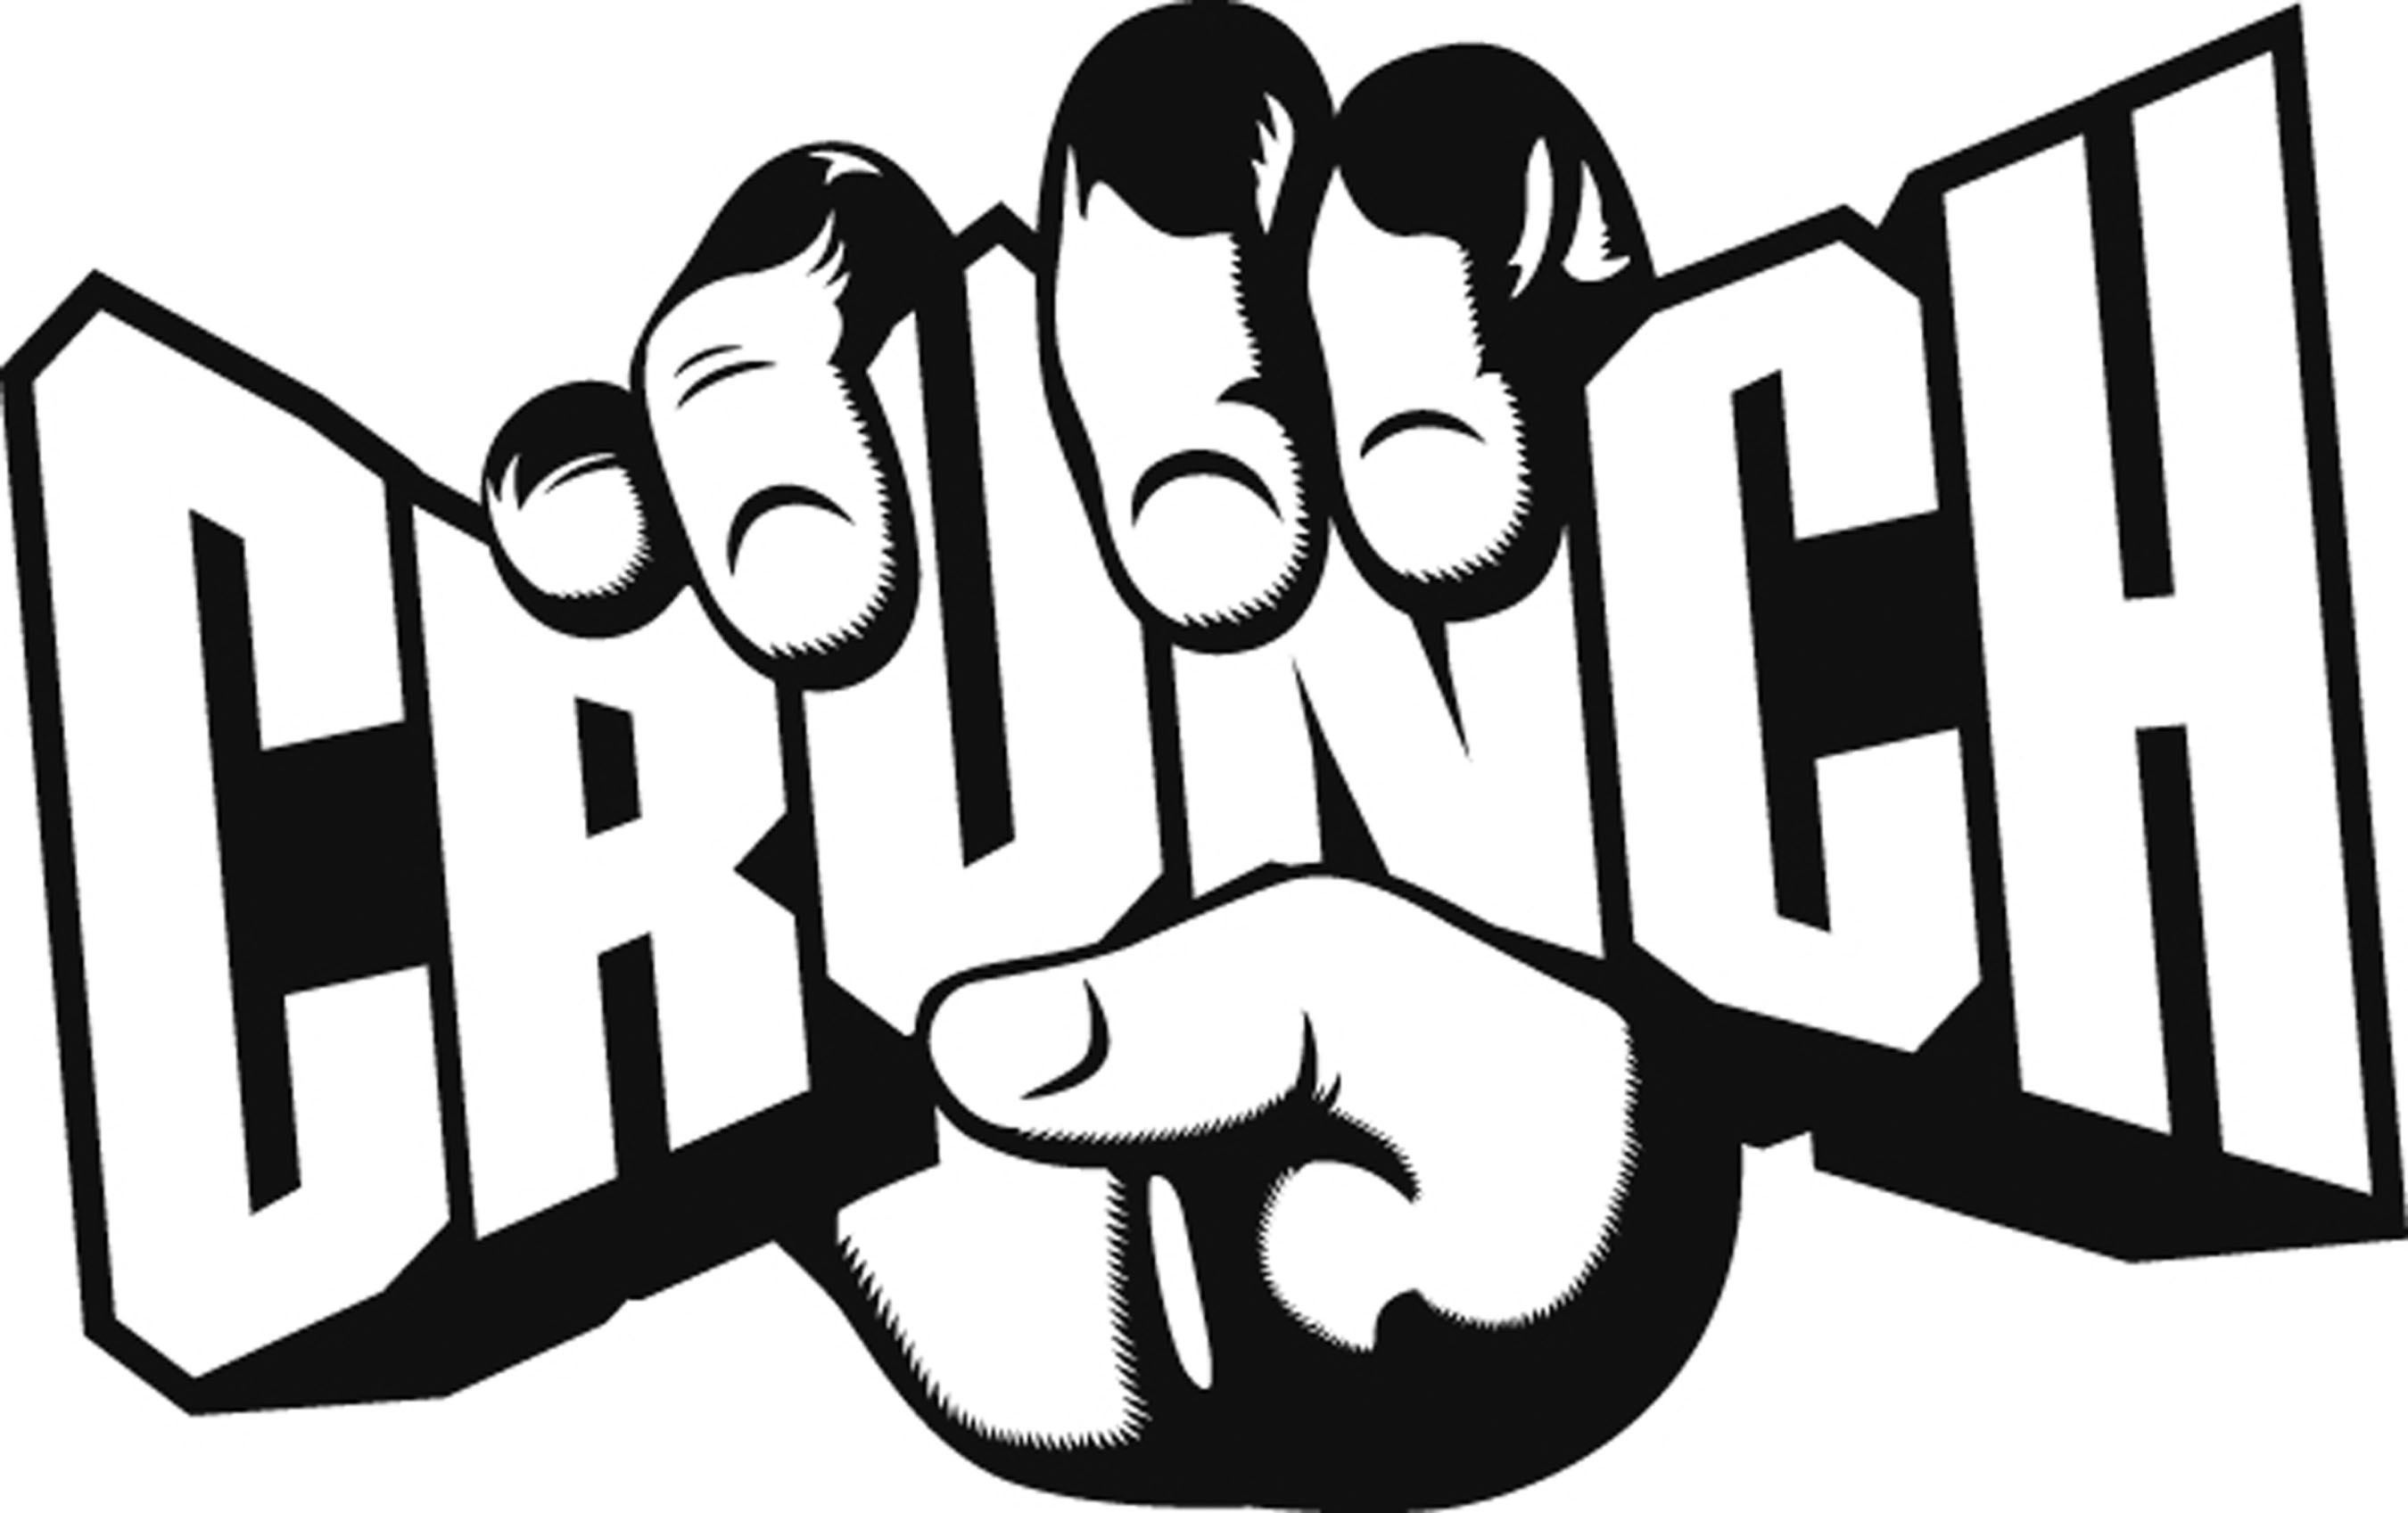 Crunch Fitness Logo